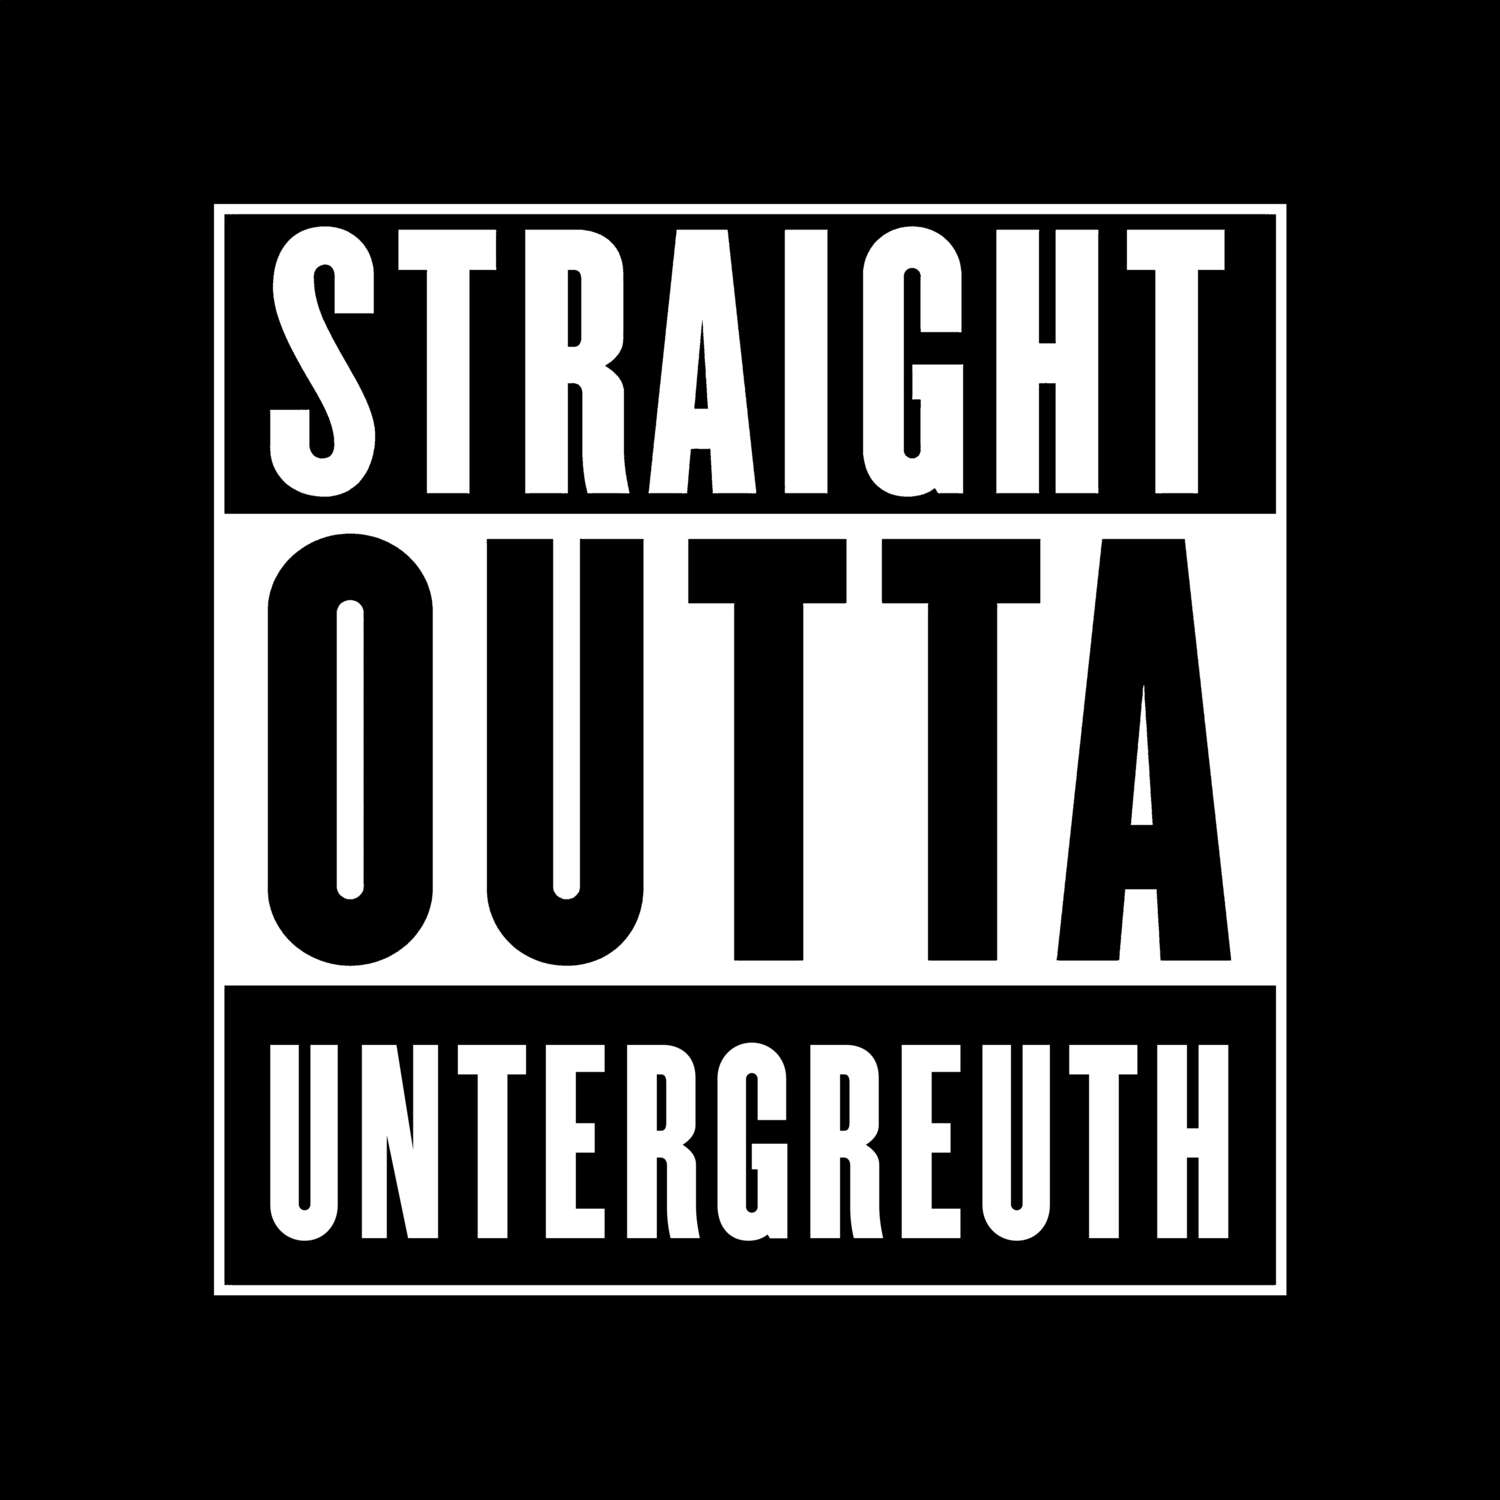 Untergreuth T-Shirt »Straight Outta«